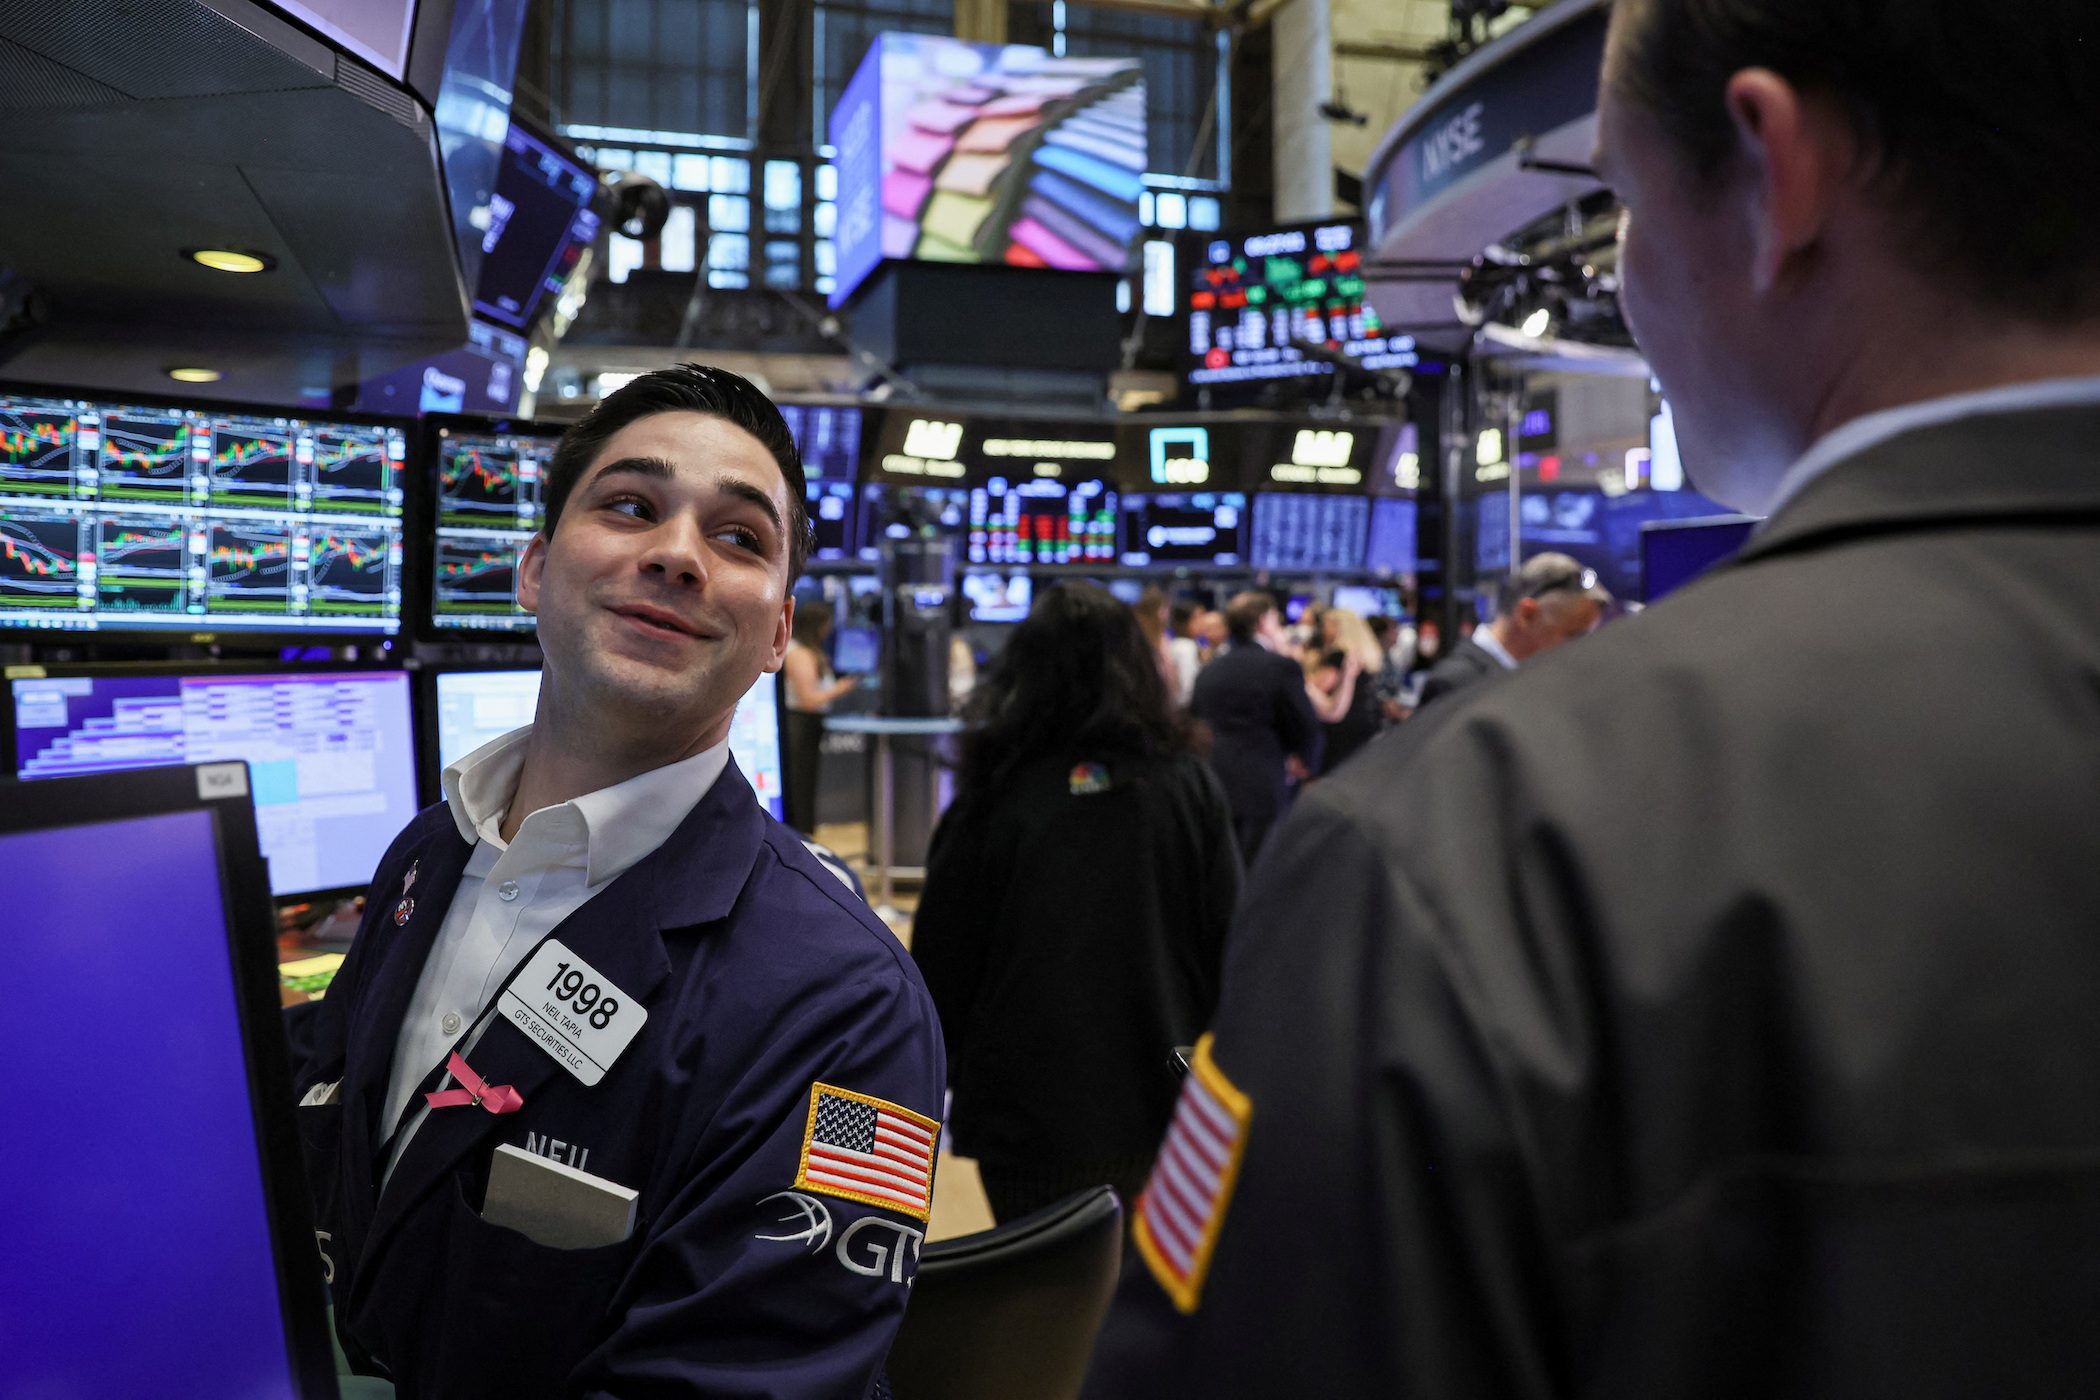 Wall Street rallies, European shares see biggest gain in 2 months